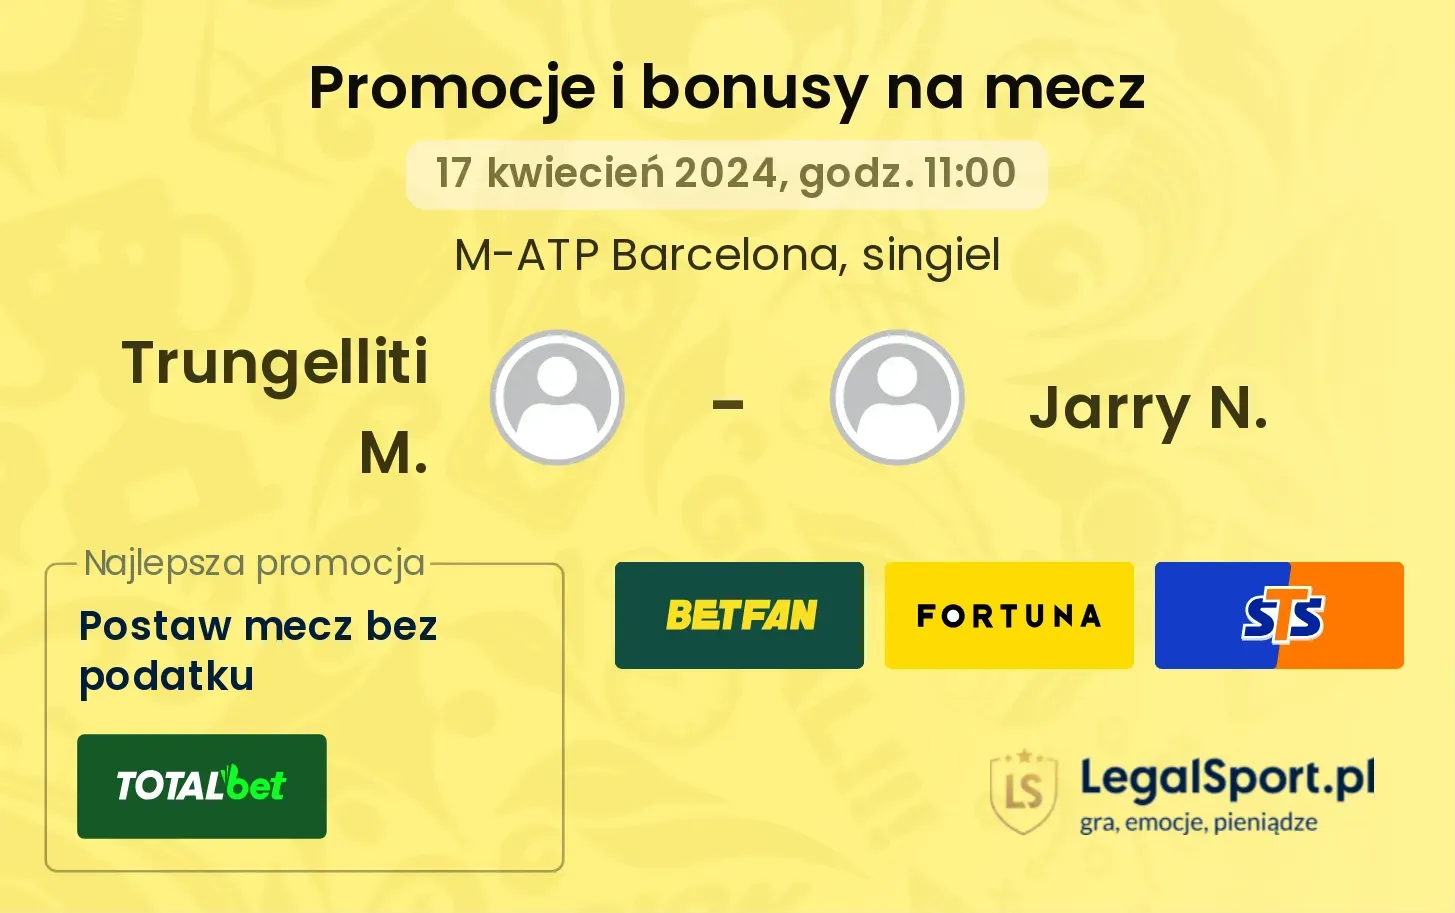 Trungelliti M. - Jarry N. promocje bonusy na mecz